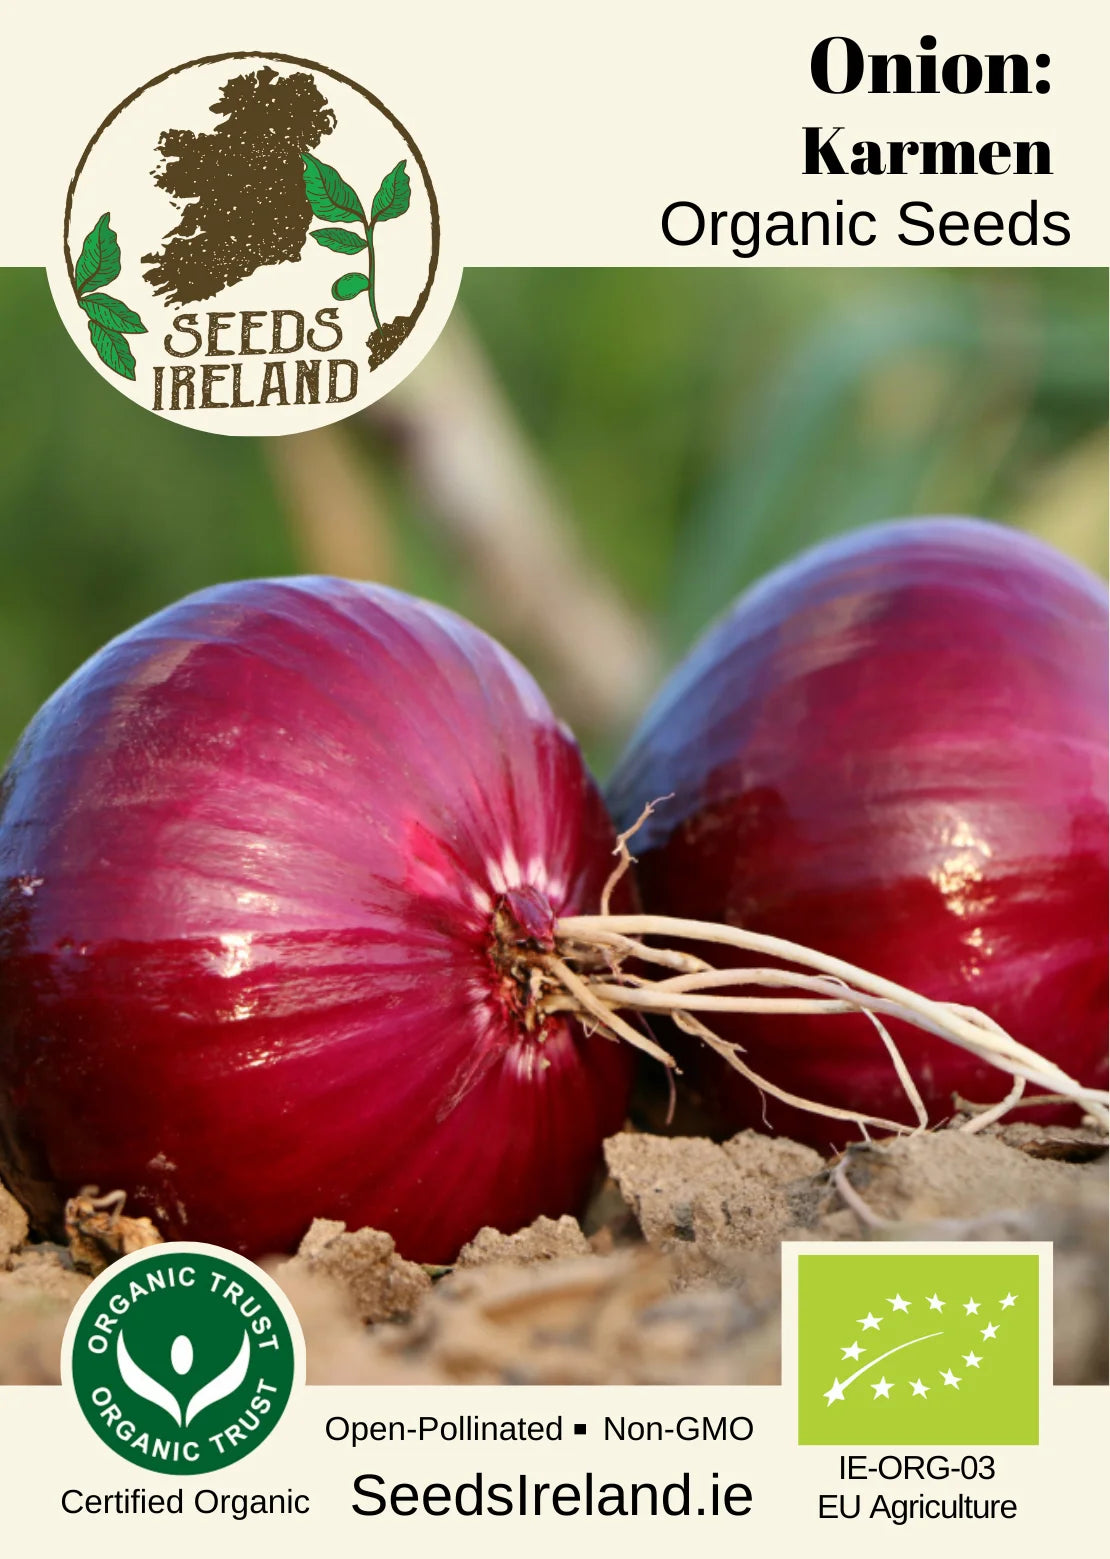 Onion: Karmen Organic Seed